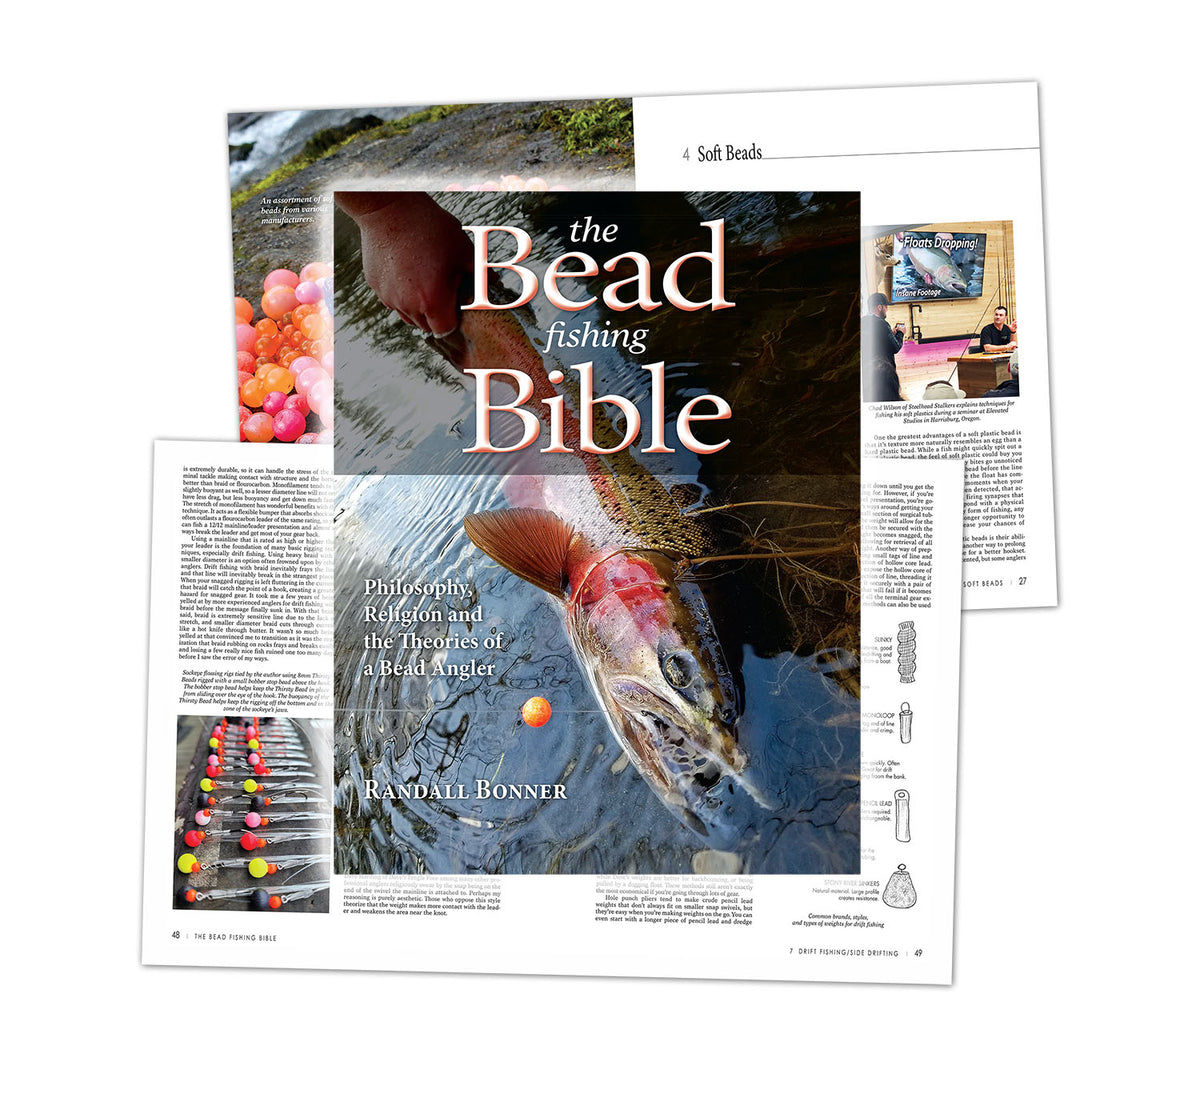 The Bead Fishing Bible by Randall Bonner – Amato Books